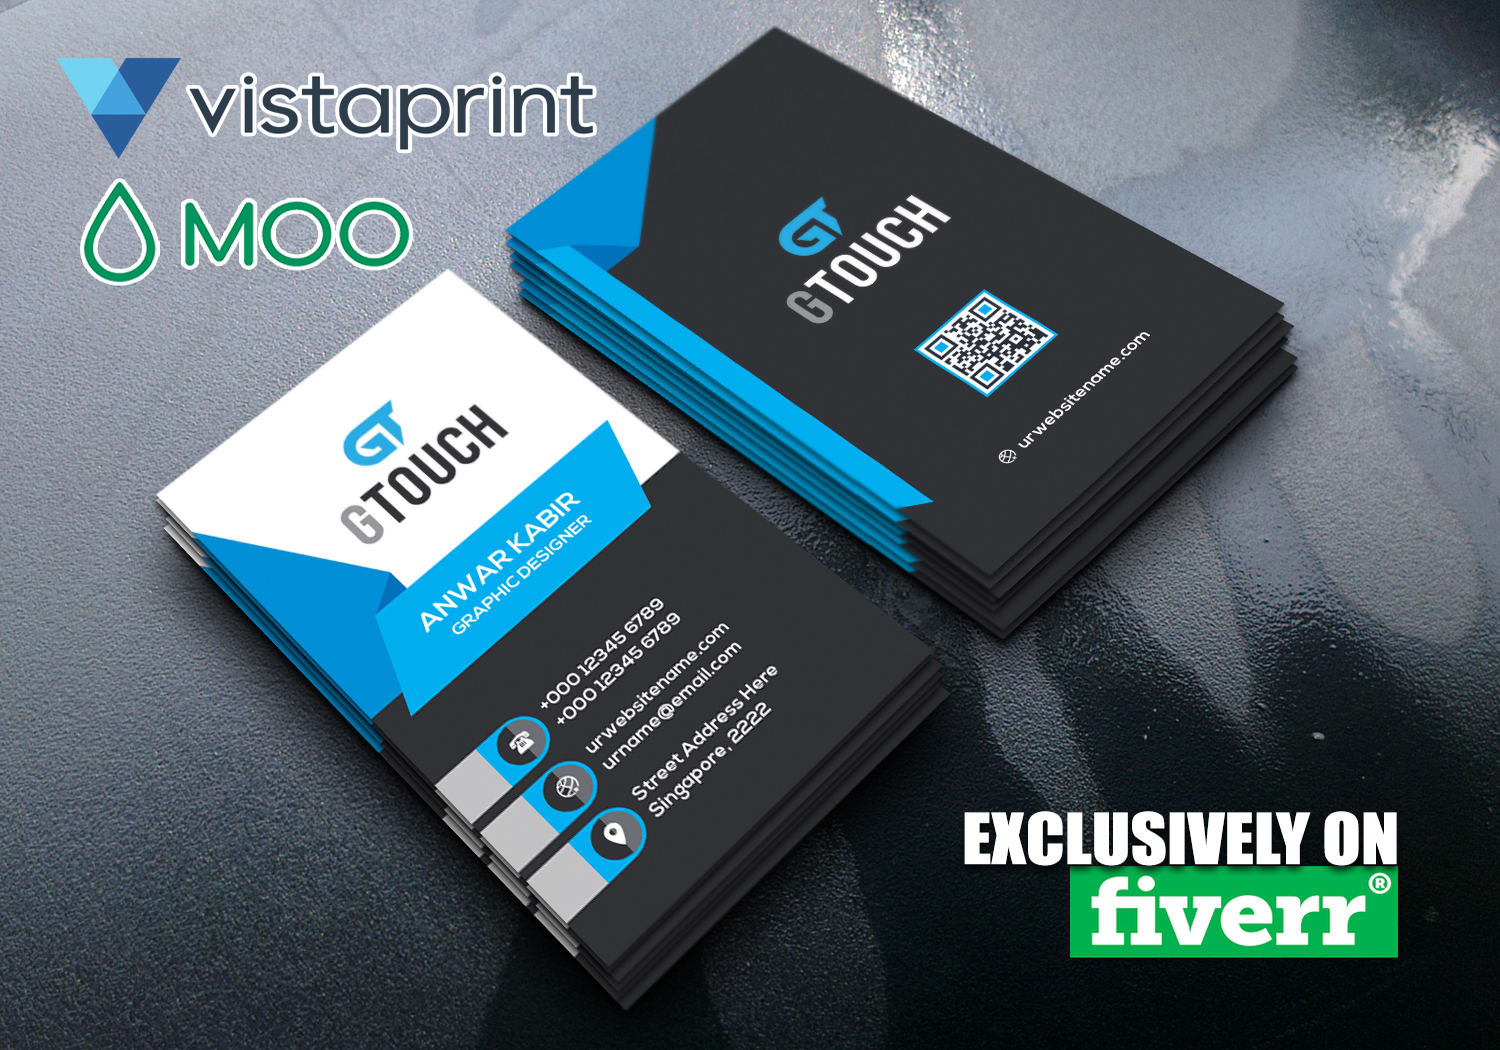 Design vista print, moo print business card with print ready by Intended For Vista Print Business Card Template